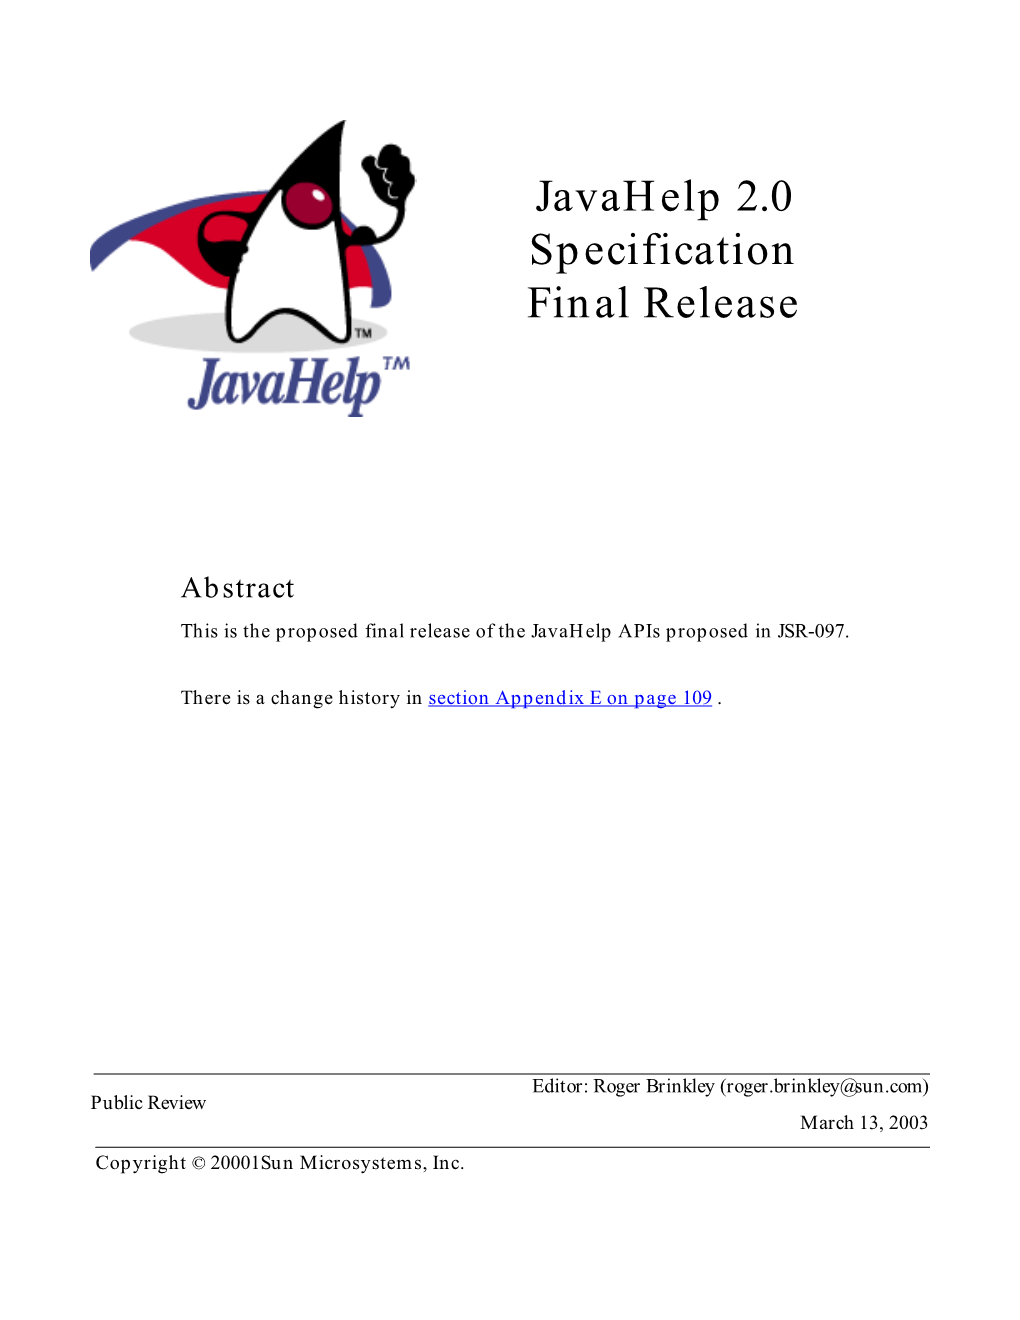 Javahelp 2.0 Specification Final Release